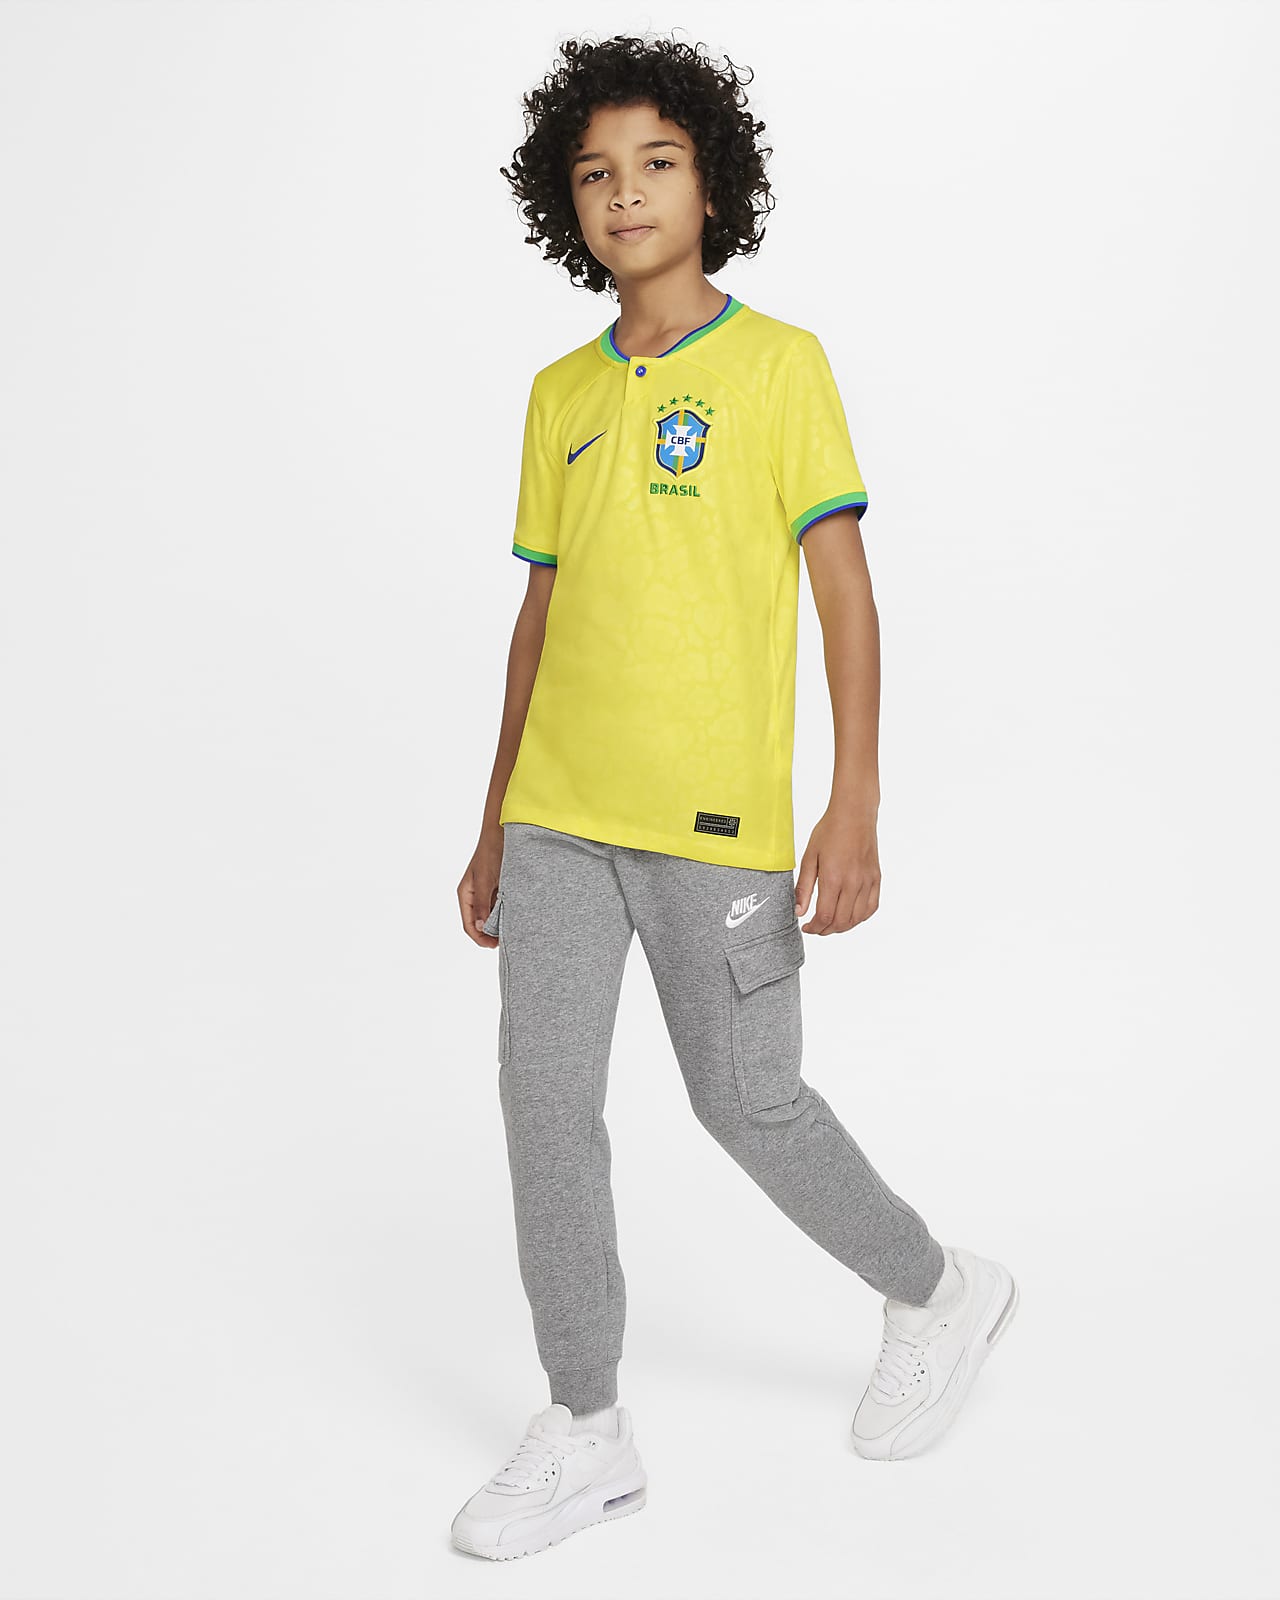 Primera equipación Stadium Brasil Camiseta de Nike - Niño/a. Nike ES